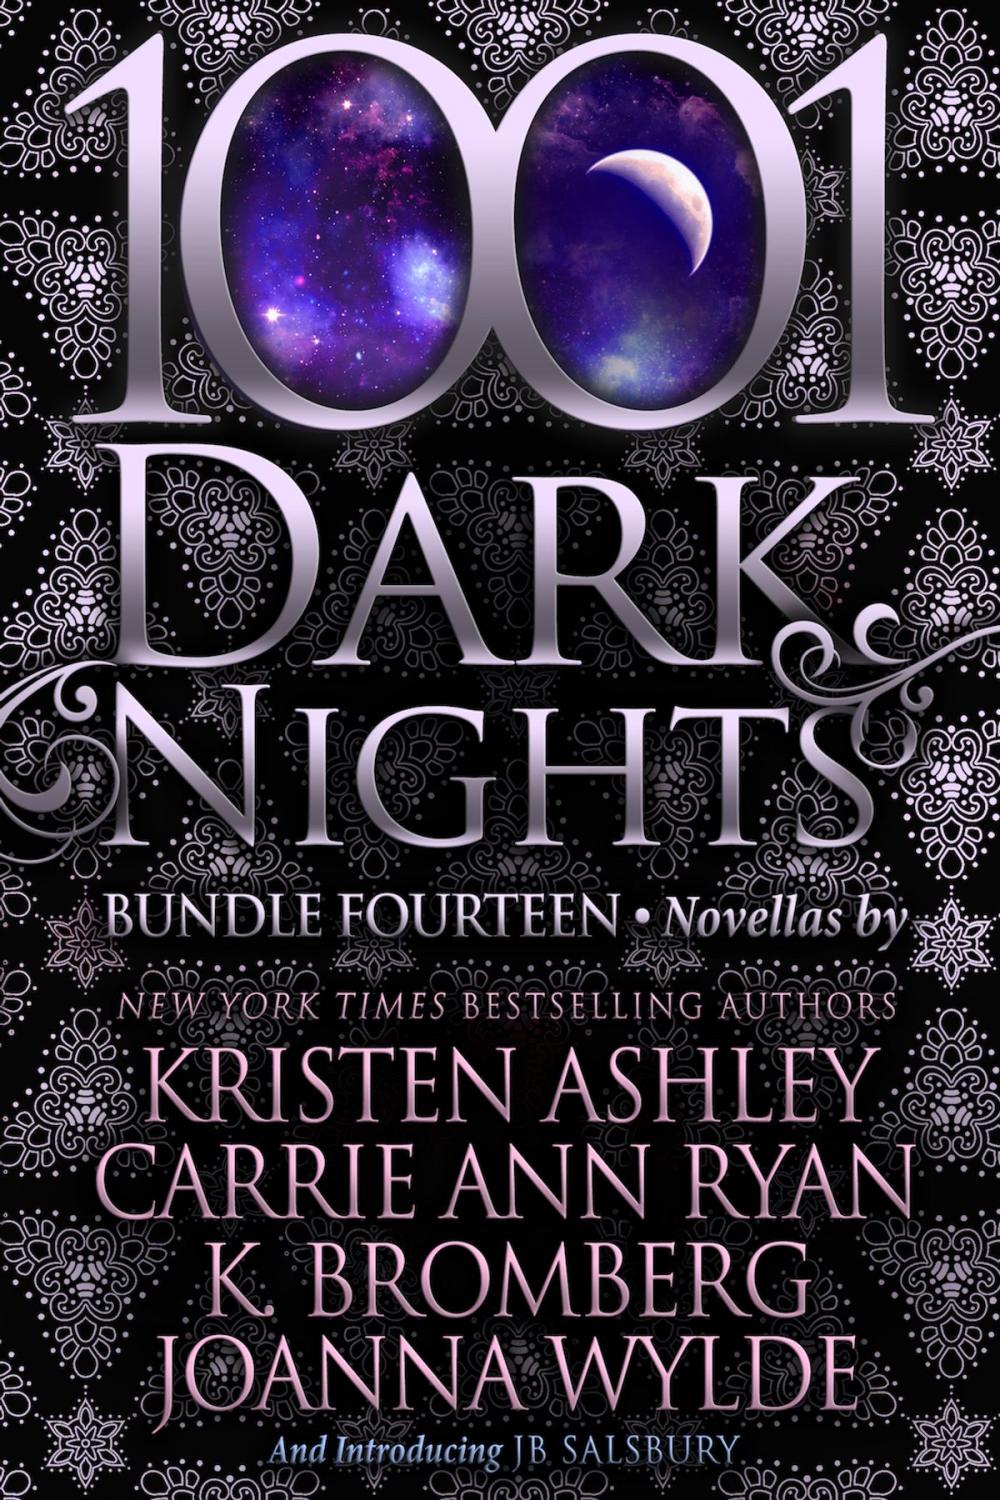 Big bigCover of 1001 Dark Nights: Bundle Fourteen